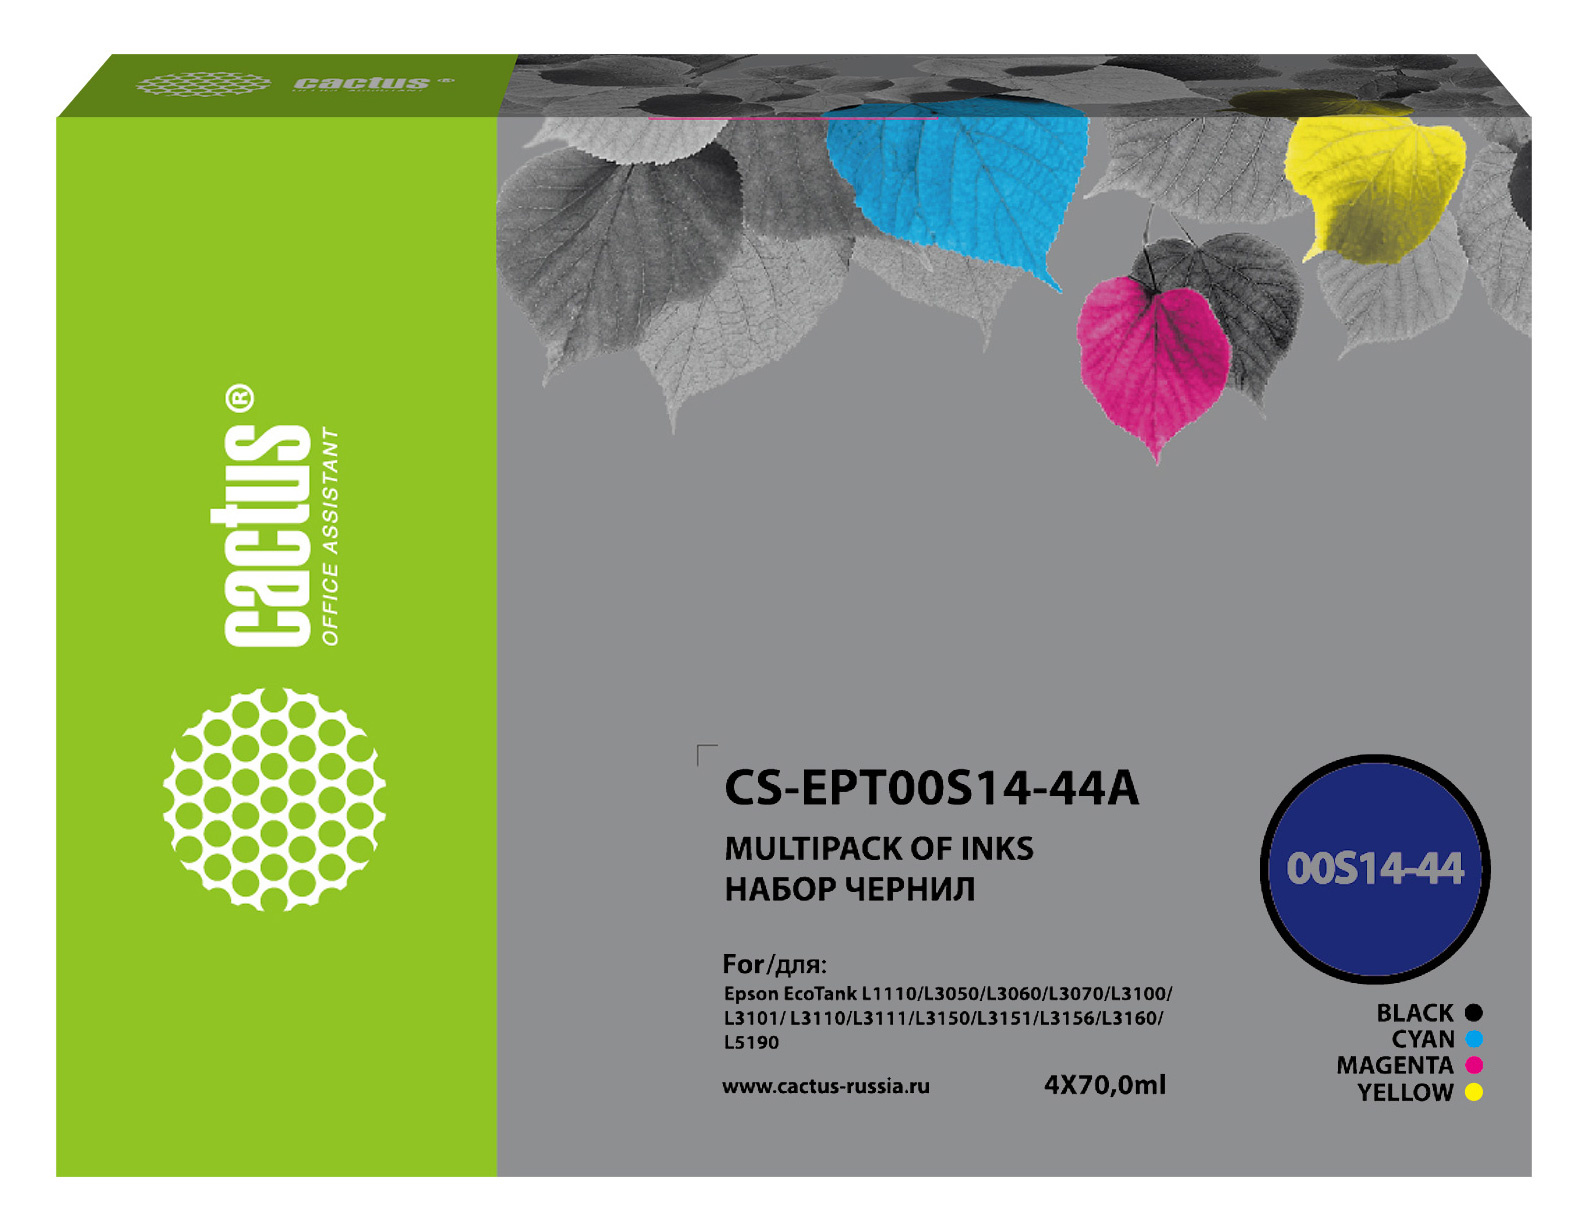 Чернила Cactus CS-EPT00S14-44A 103 многоцветный набор 4x70мл для Epson L1110 Ecotank/L3100/L3101/L3110/L3150/L3151